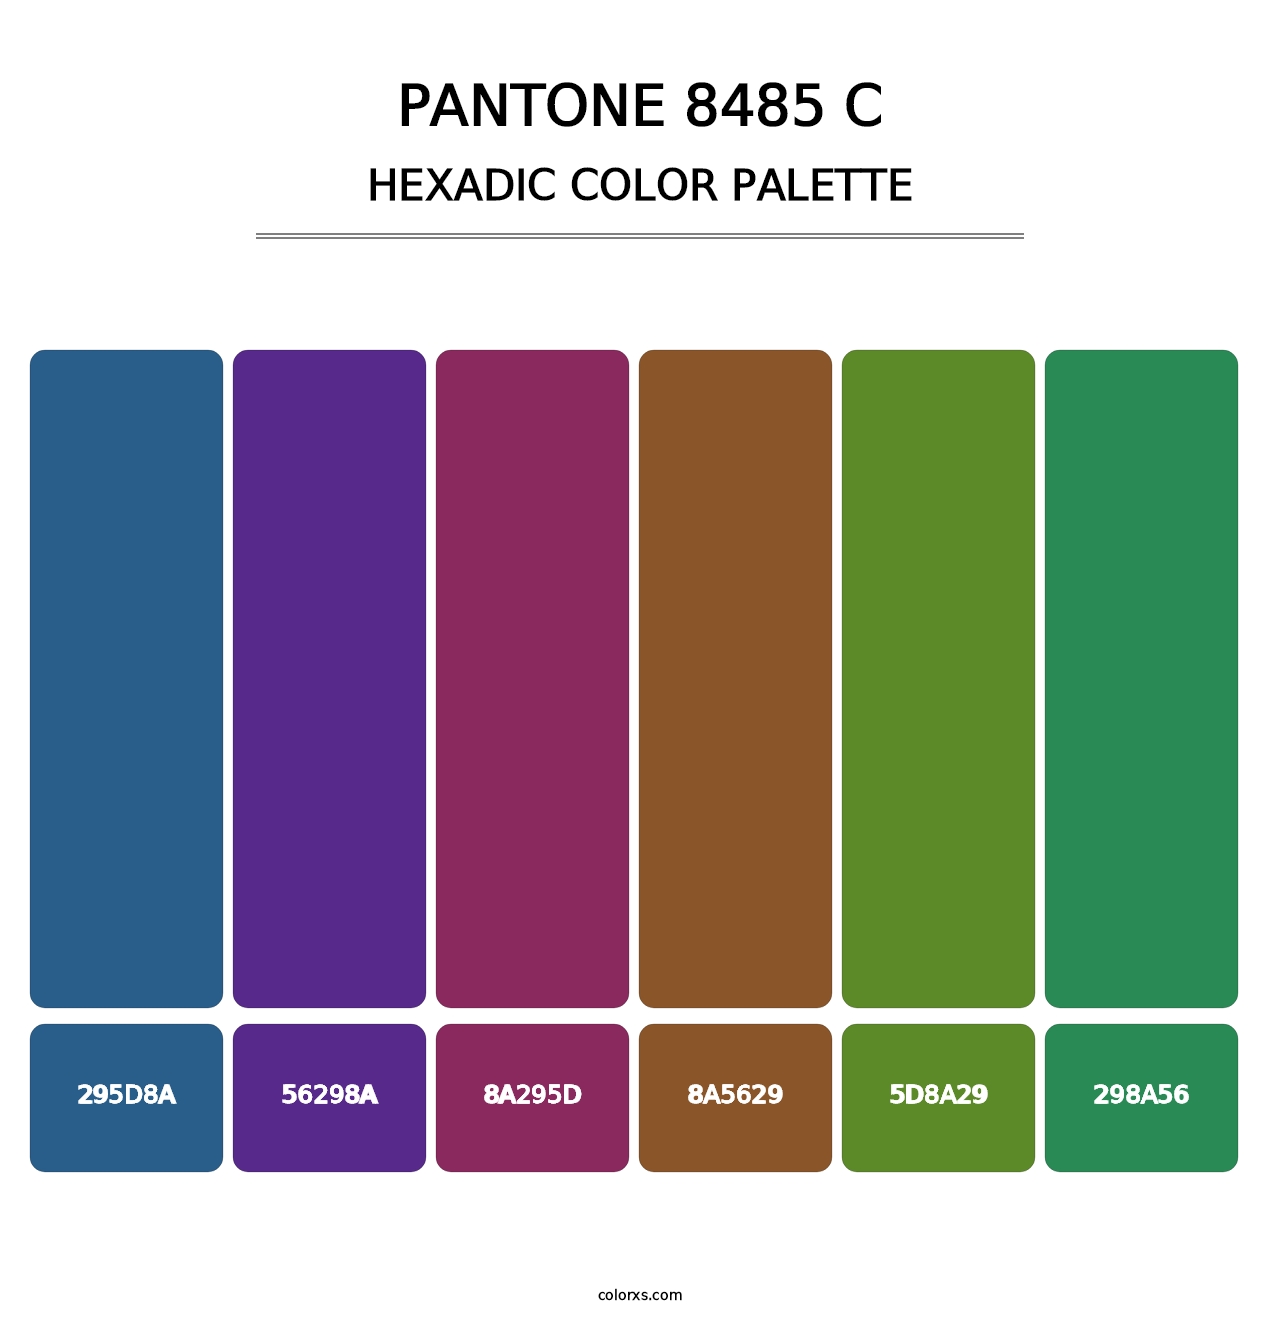 PANTONE 8485 C - Hexadic Color Palette